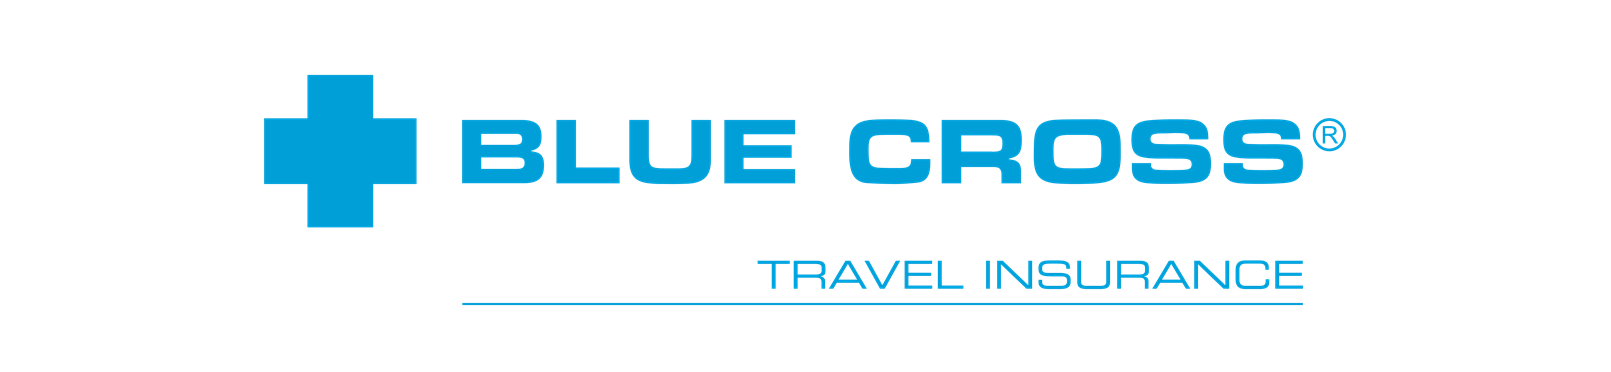 Blue Cross travel insurance